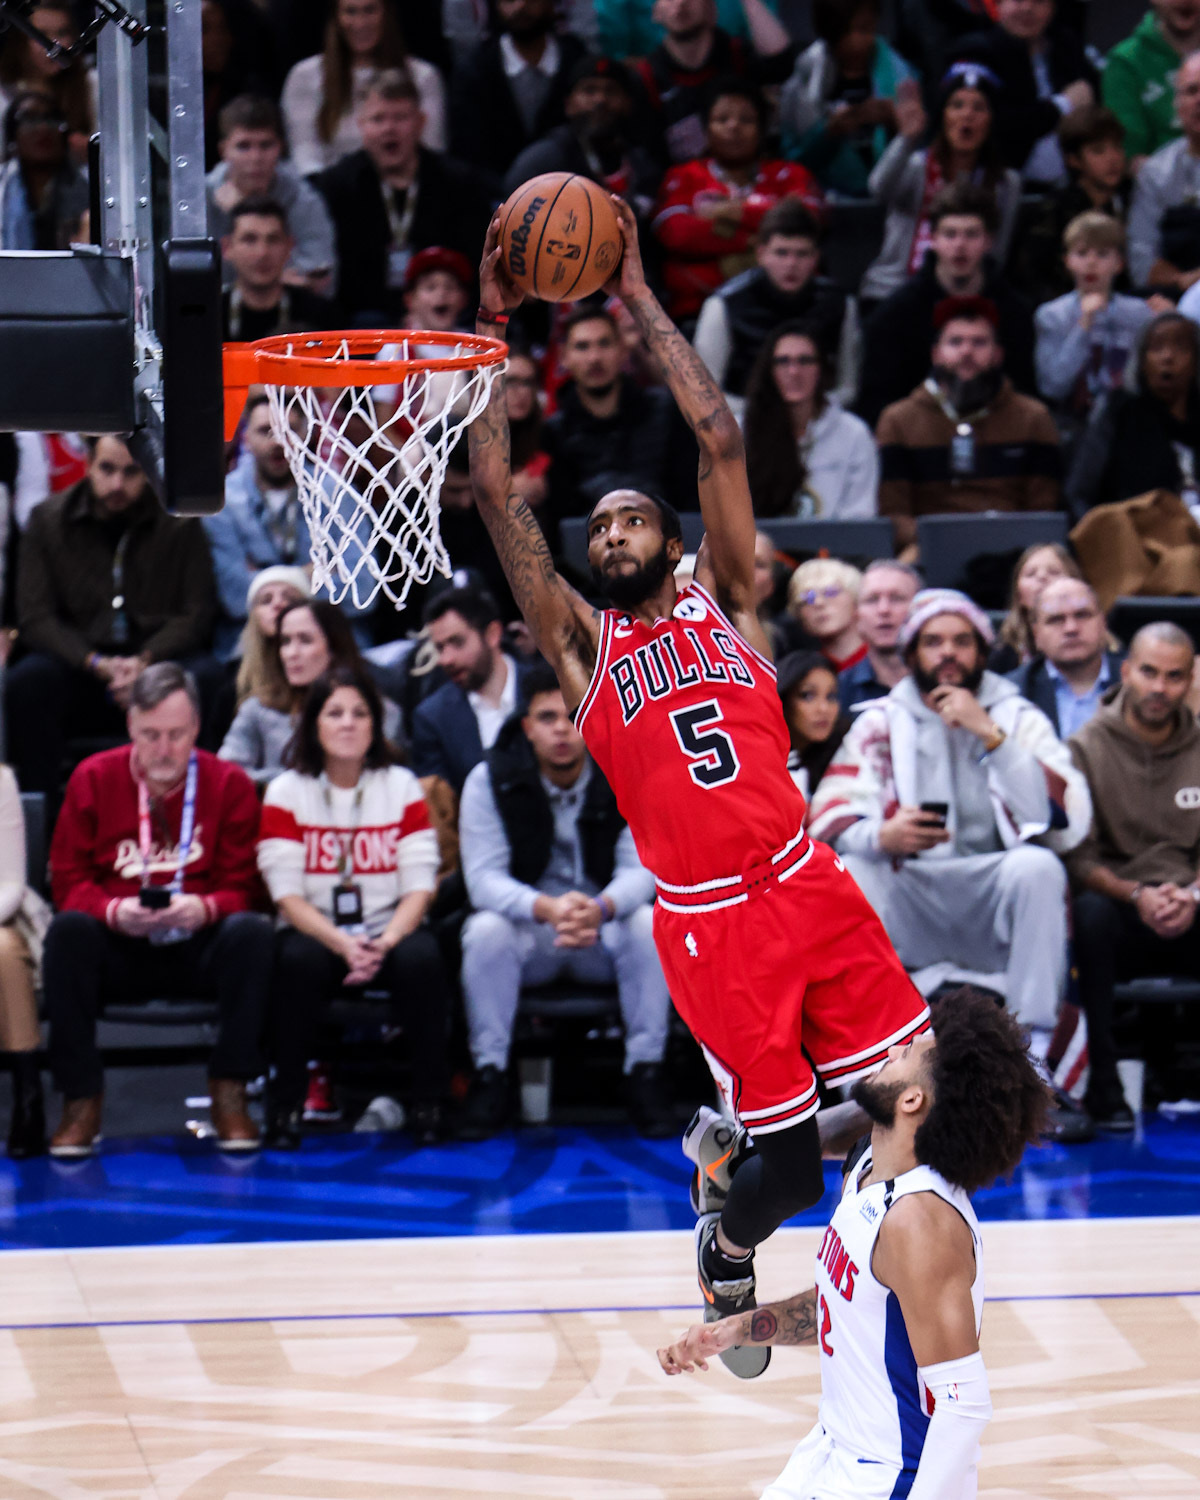 Chicago Bulls' Derrick Jones Jr. Proposes During Team Trip to Paris